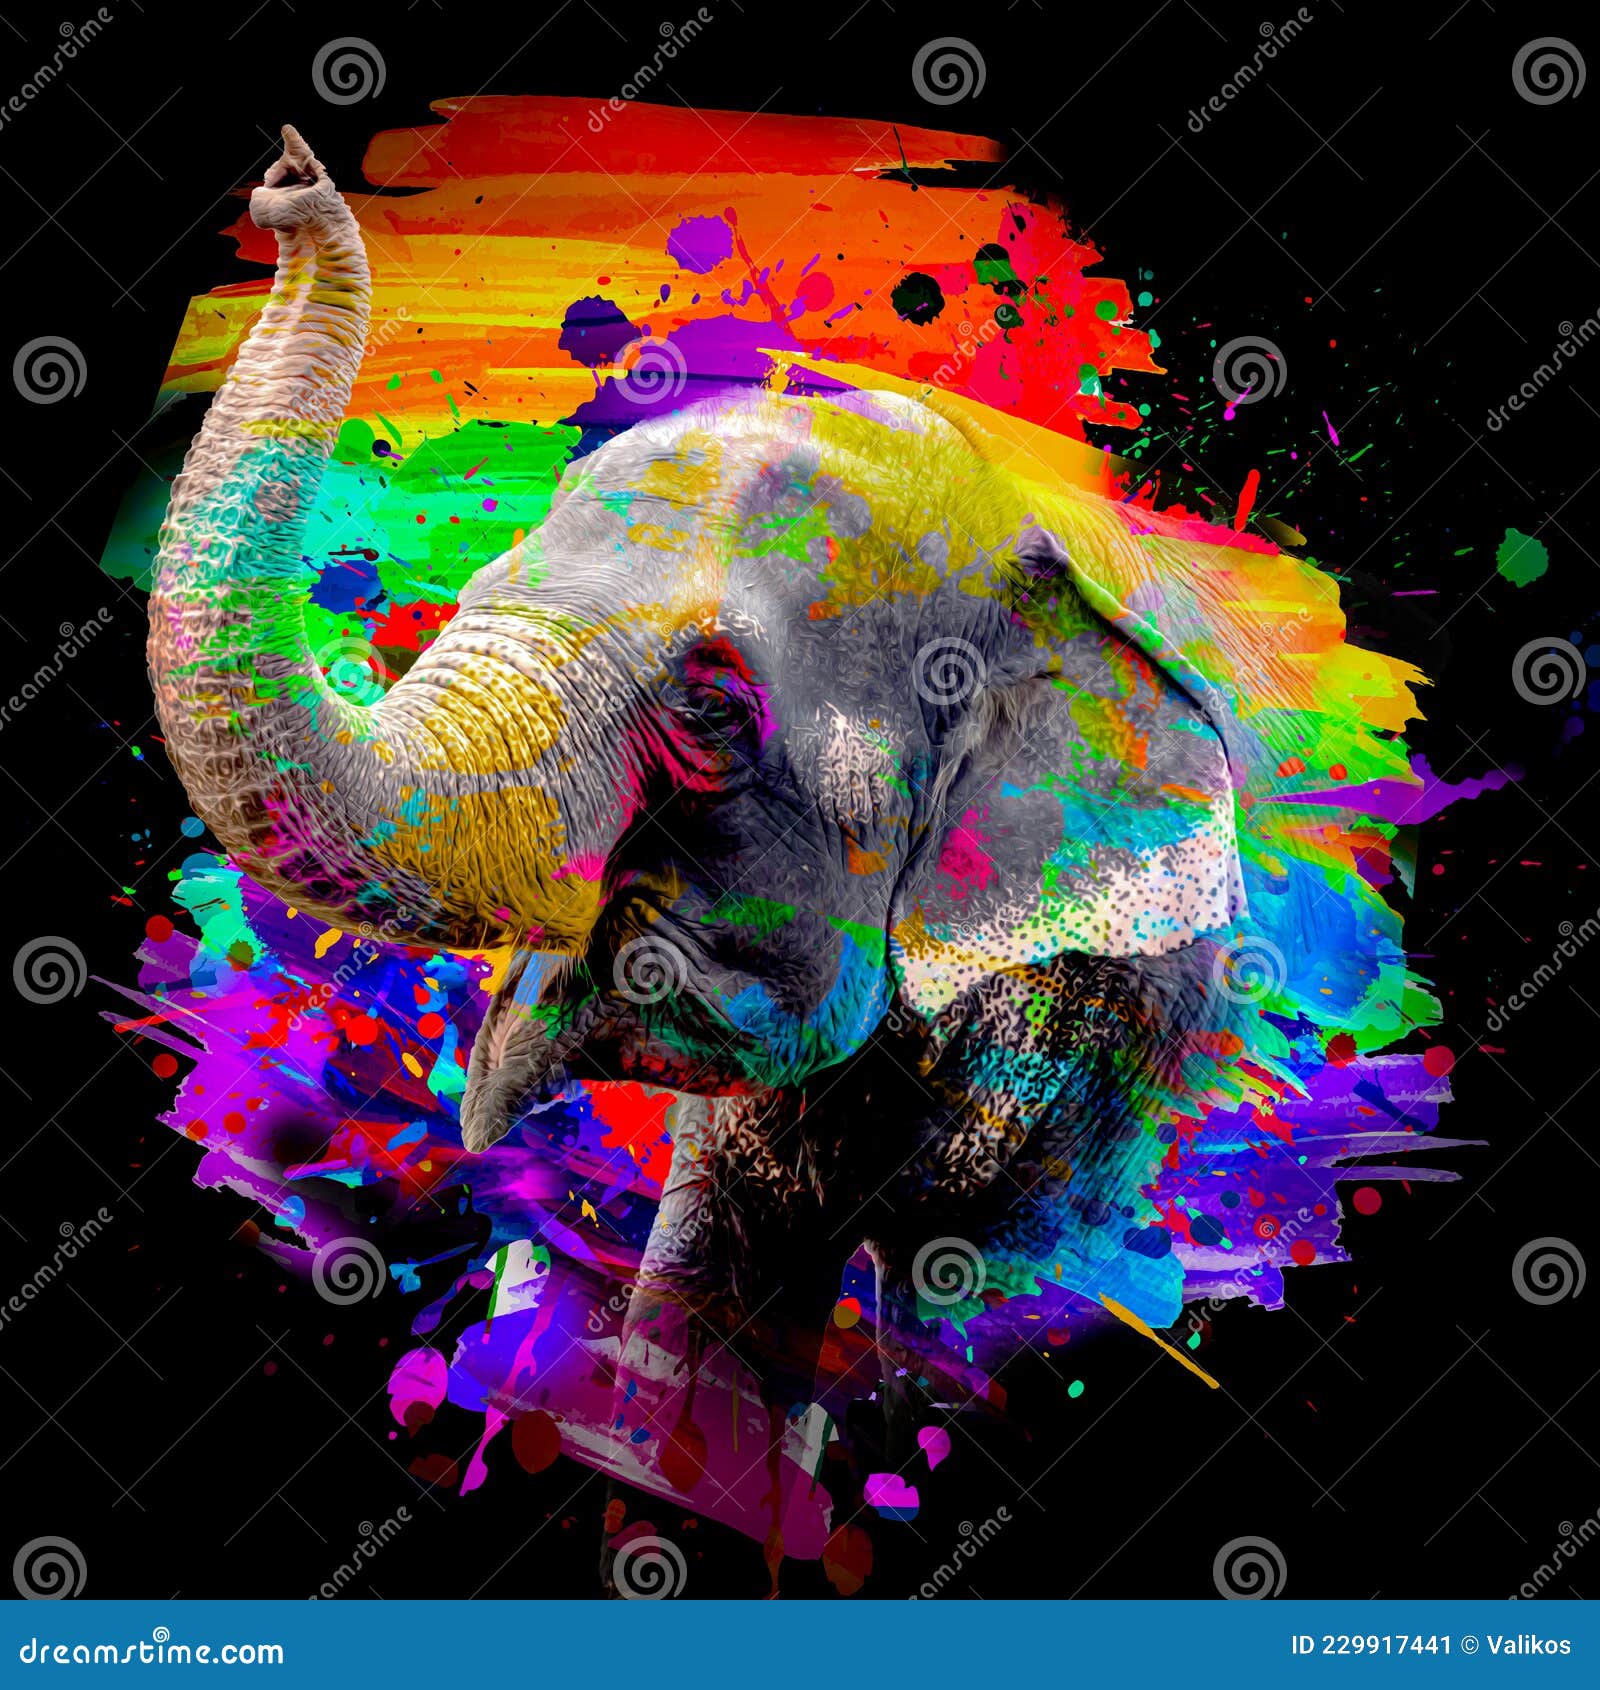 colorful elephant wallpaper